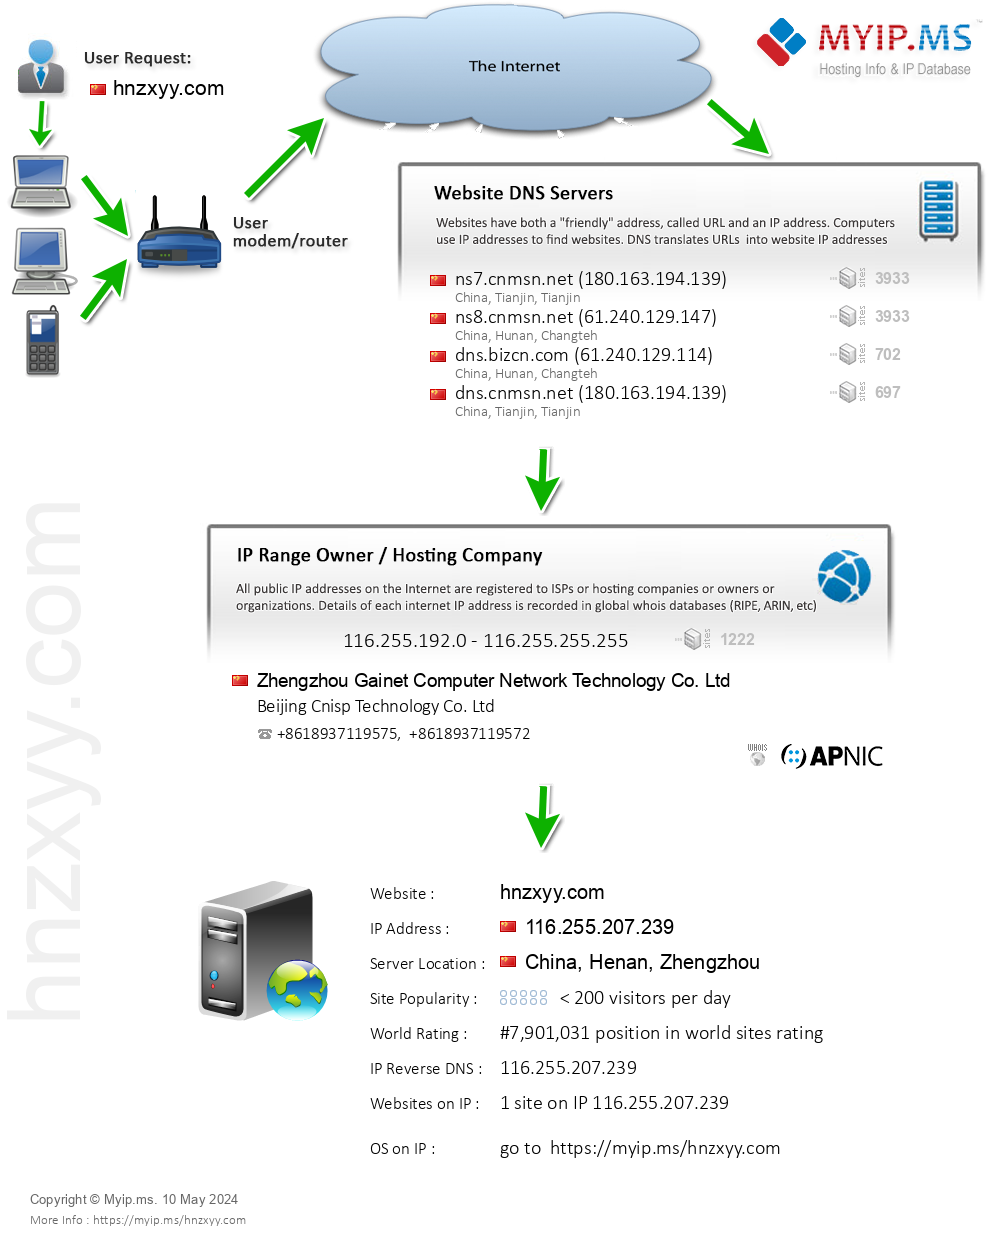 Hnzxyy.com - Website Hosting Visual IP Diagram